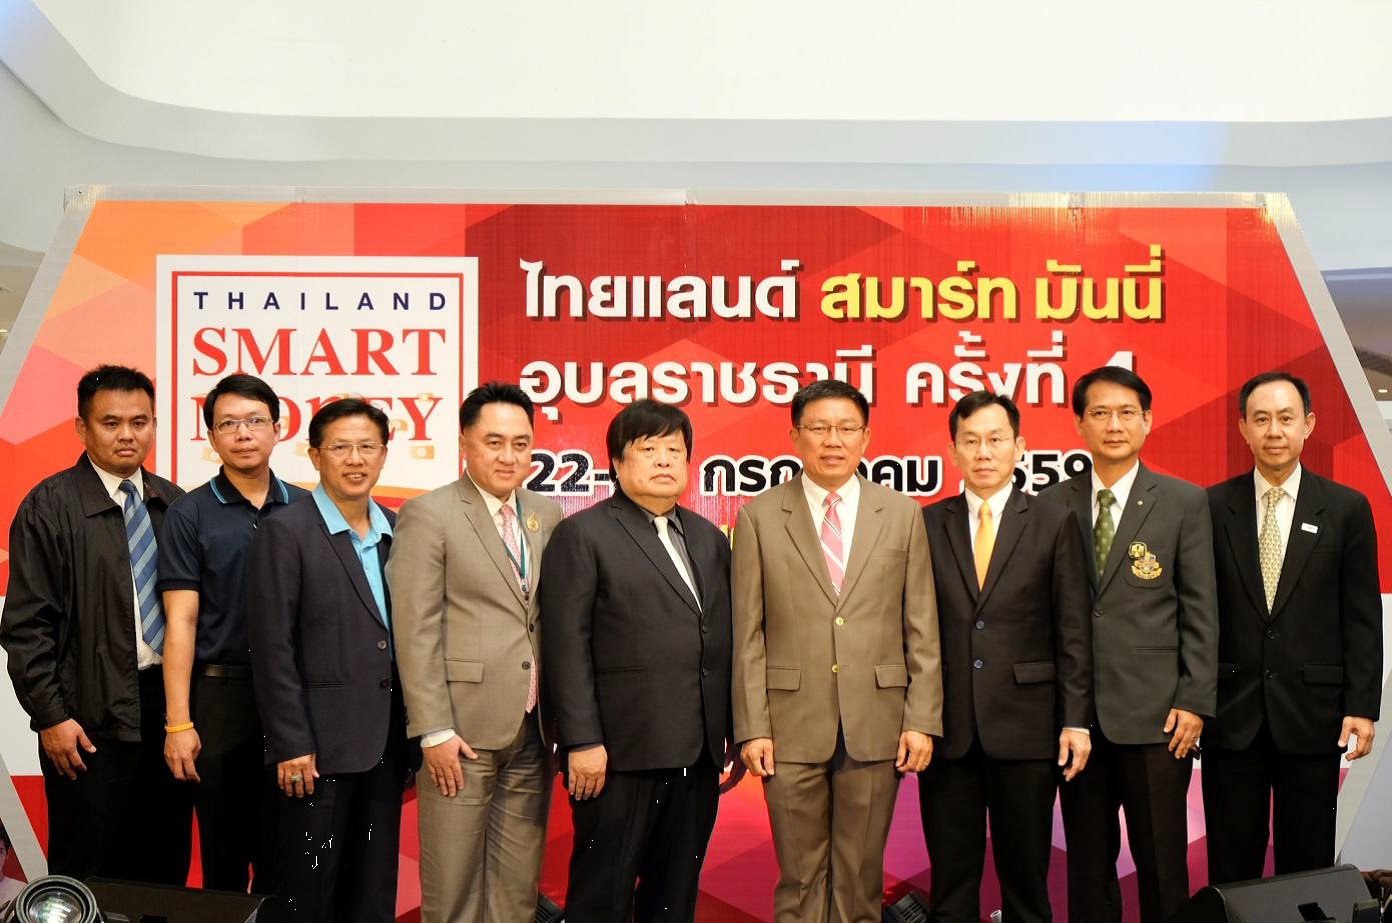 EXIM BANK ออกบูทในงาน Thailand Smart Money สัญจรอุบลราชธานี ครั้งที่ 4